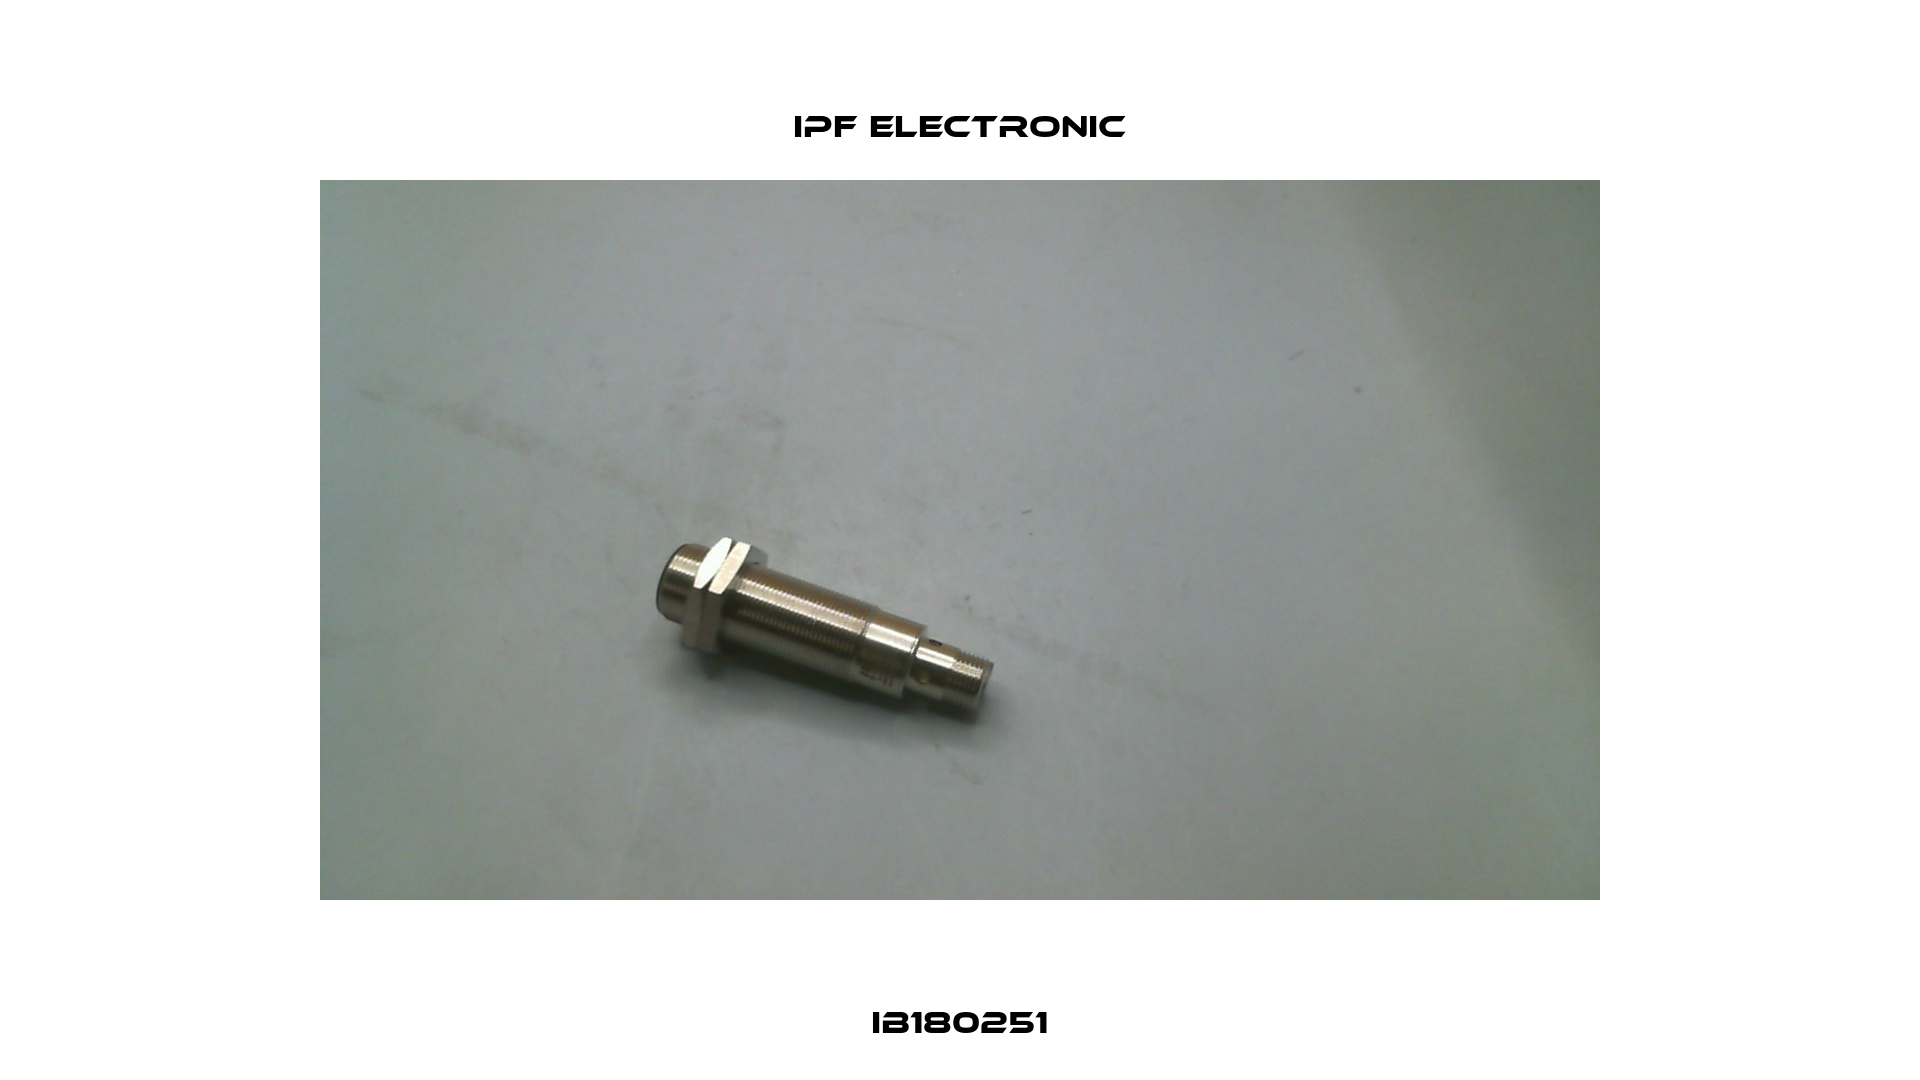 IB180251 IPF Electronic